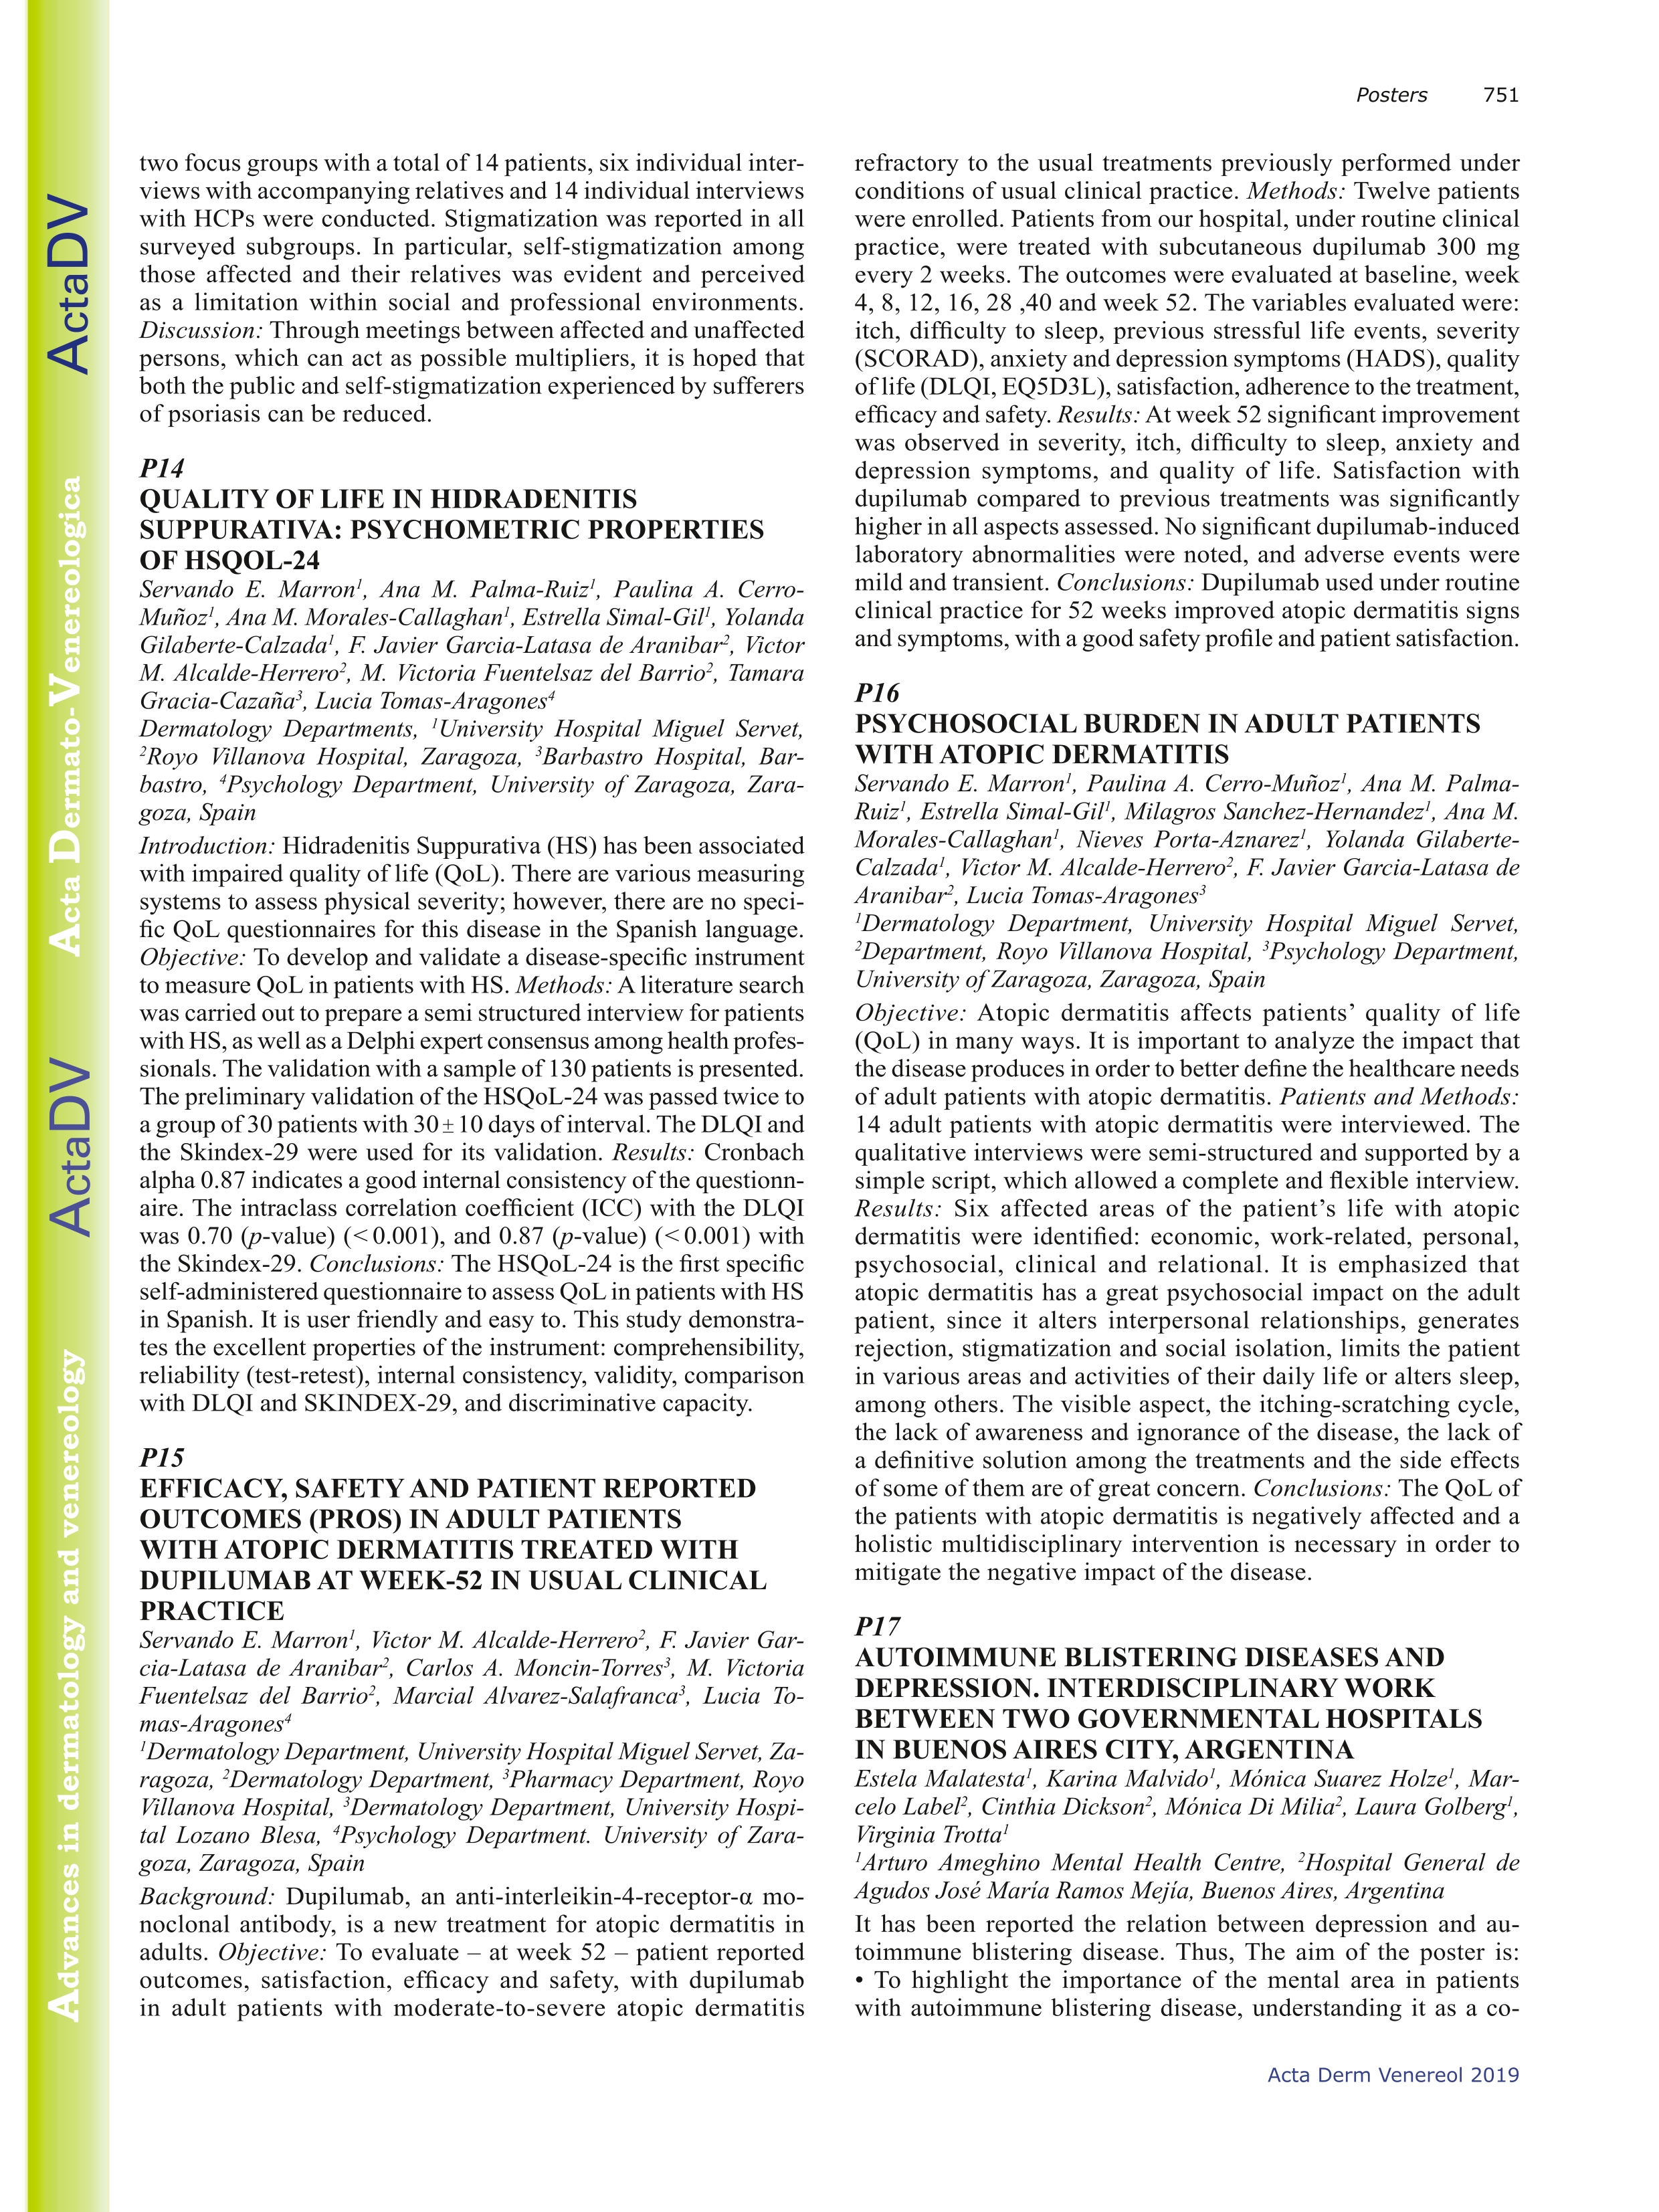 Quality of life in hidradenitis suppurativa: psychometric properties of HSQOL-24